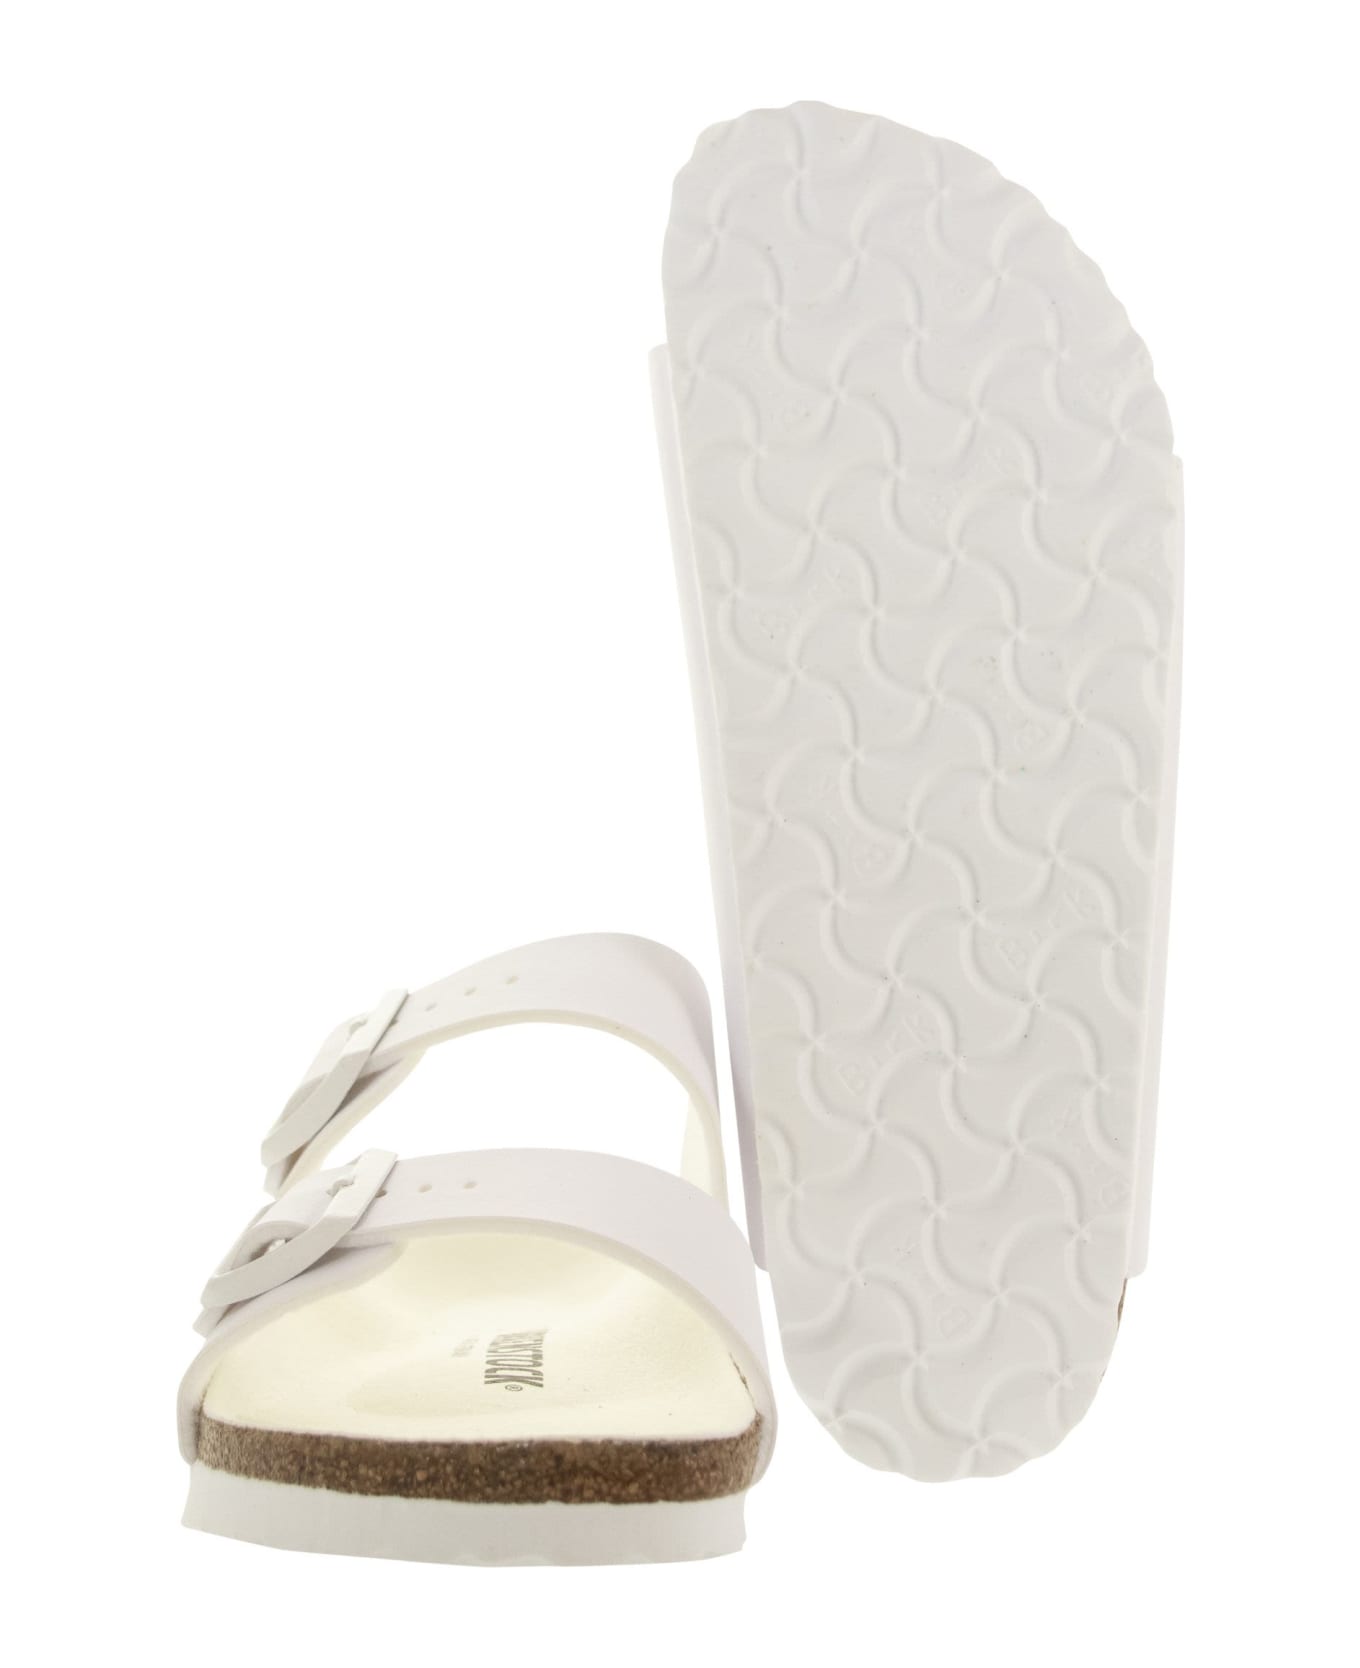 Birkenstock Arizona - Slipper Sandal - Triples white サンダル